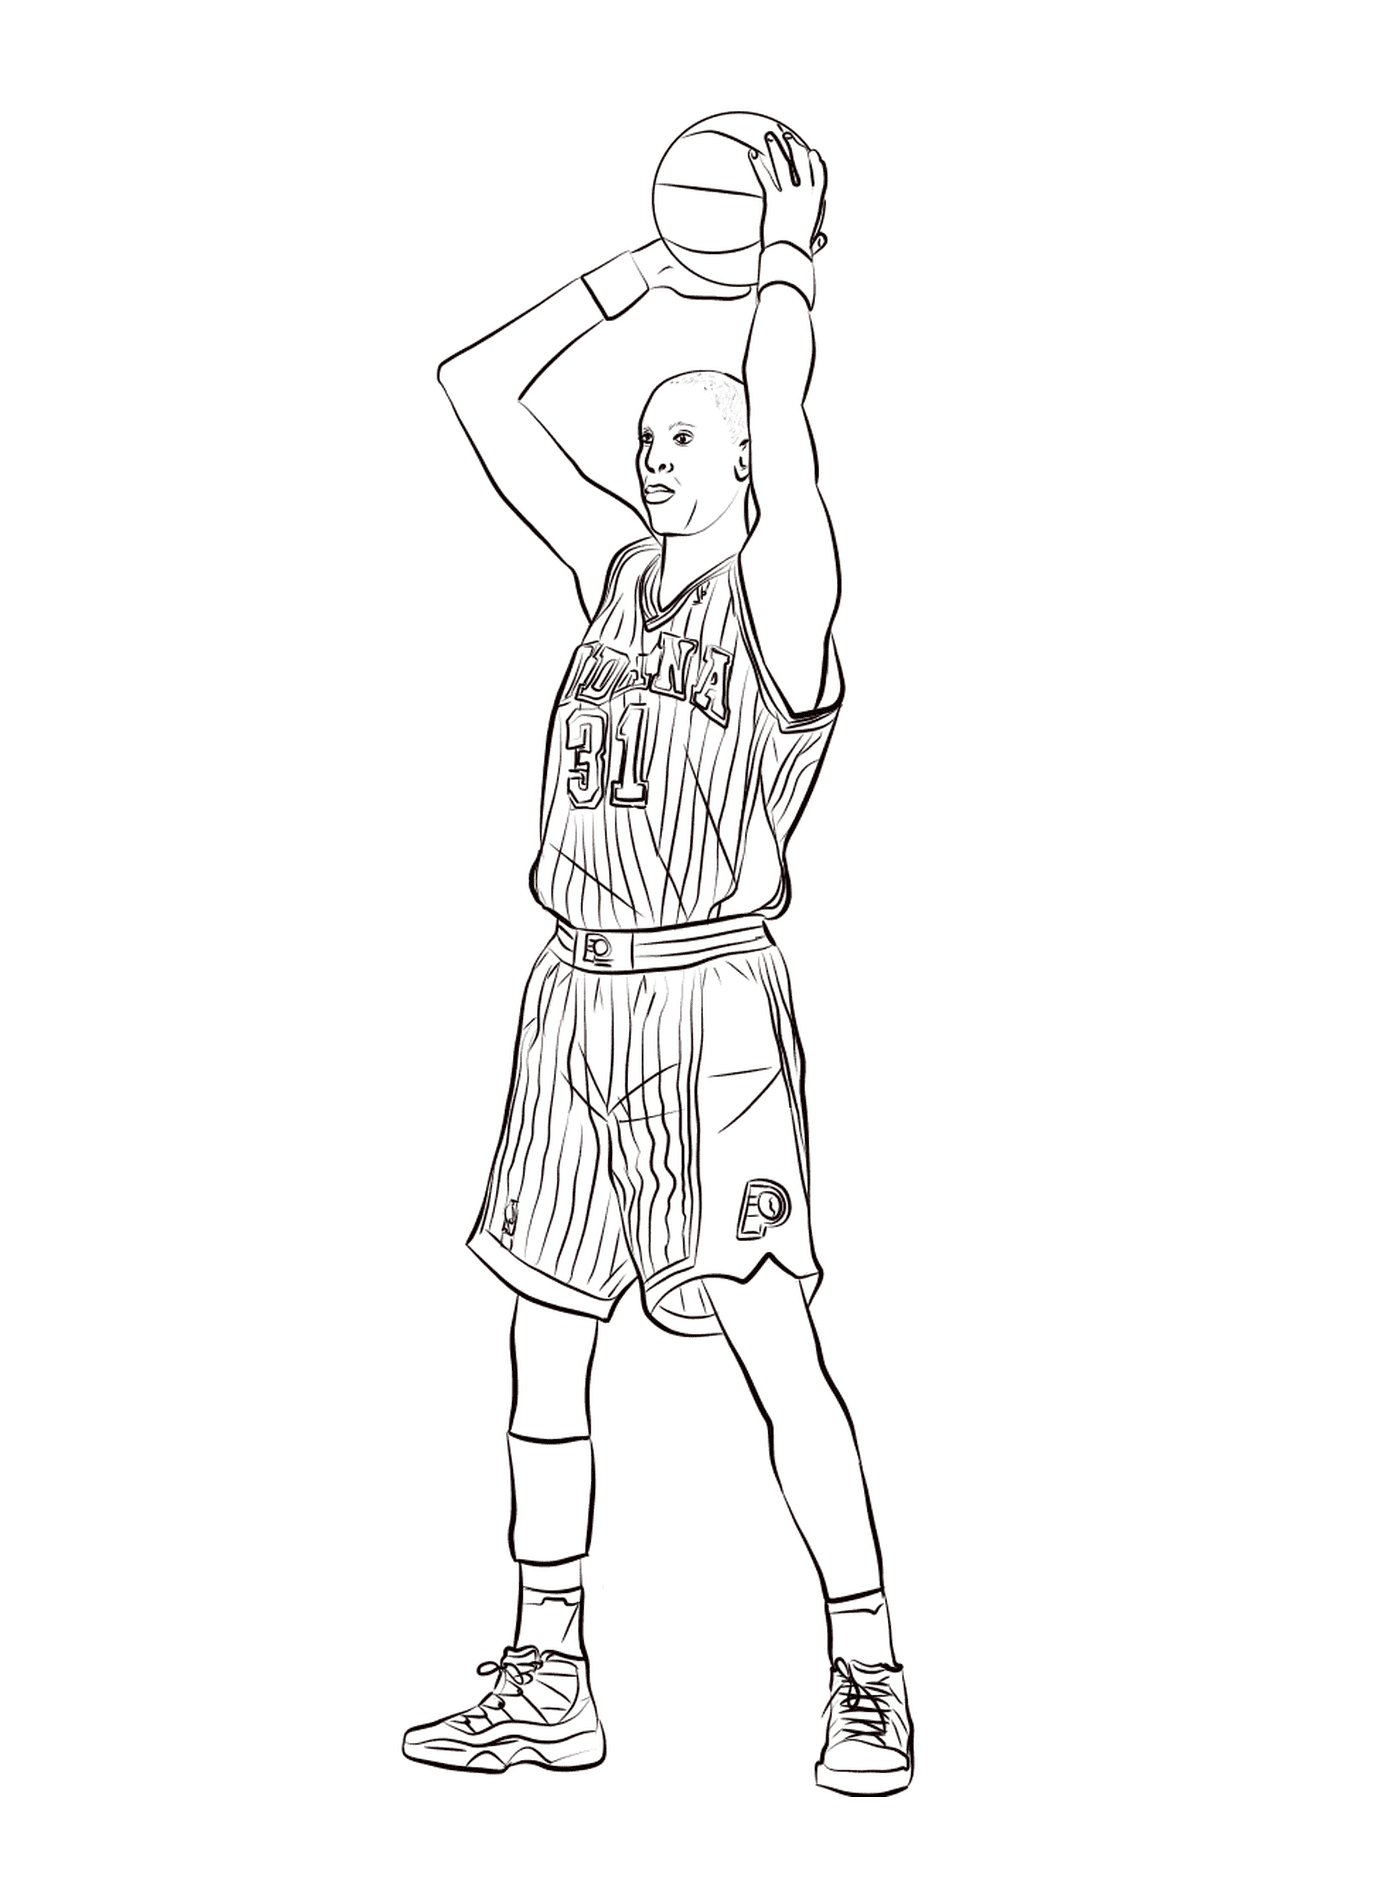  Reggie Miller hält einen Basketballball 